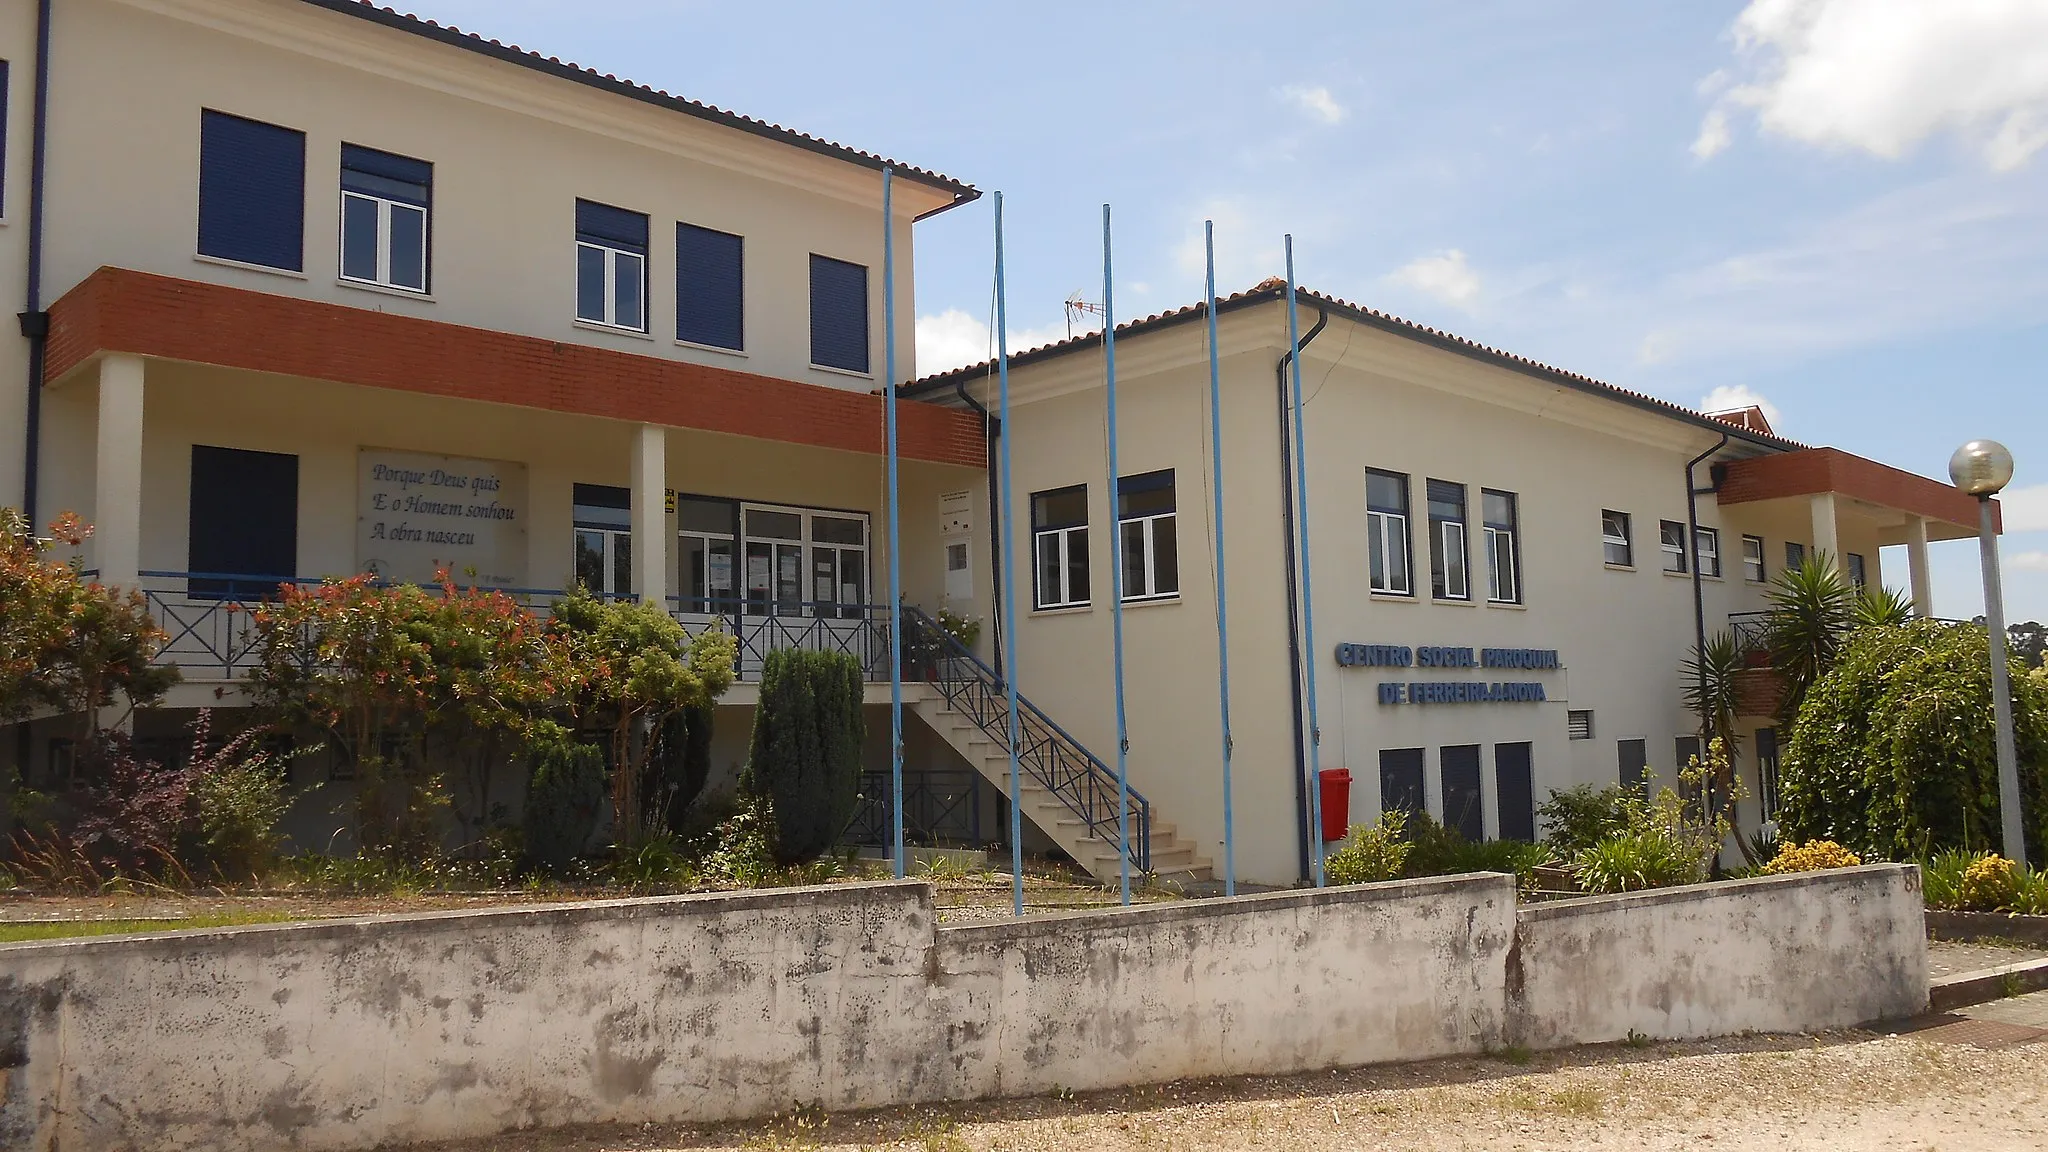 Photo showing: The social centre of the parish of Ferreira-a-Nova.